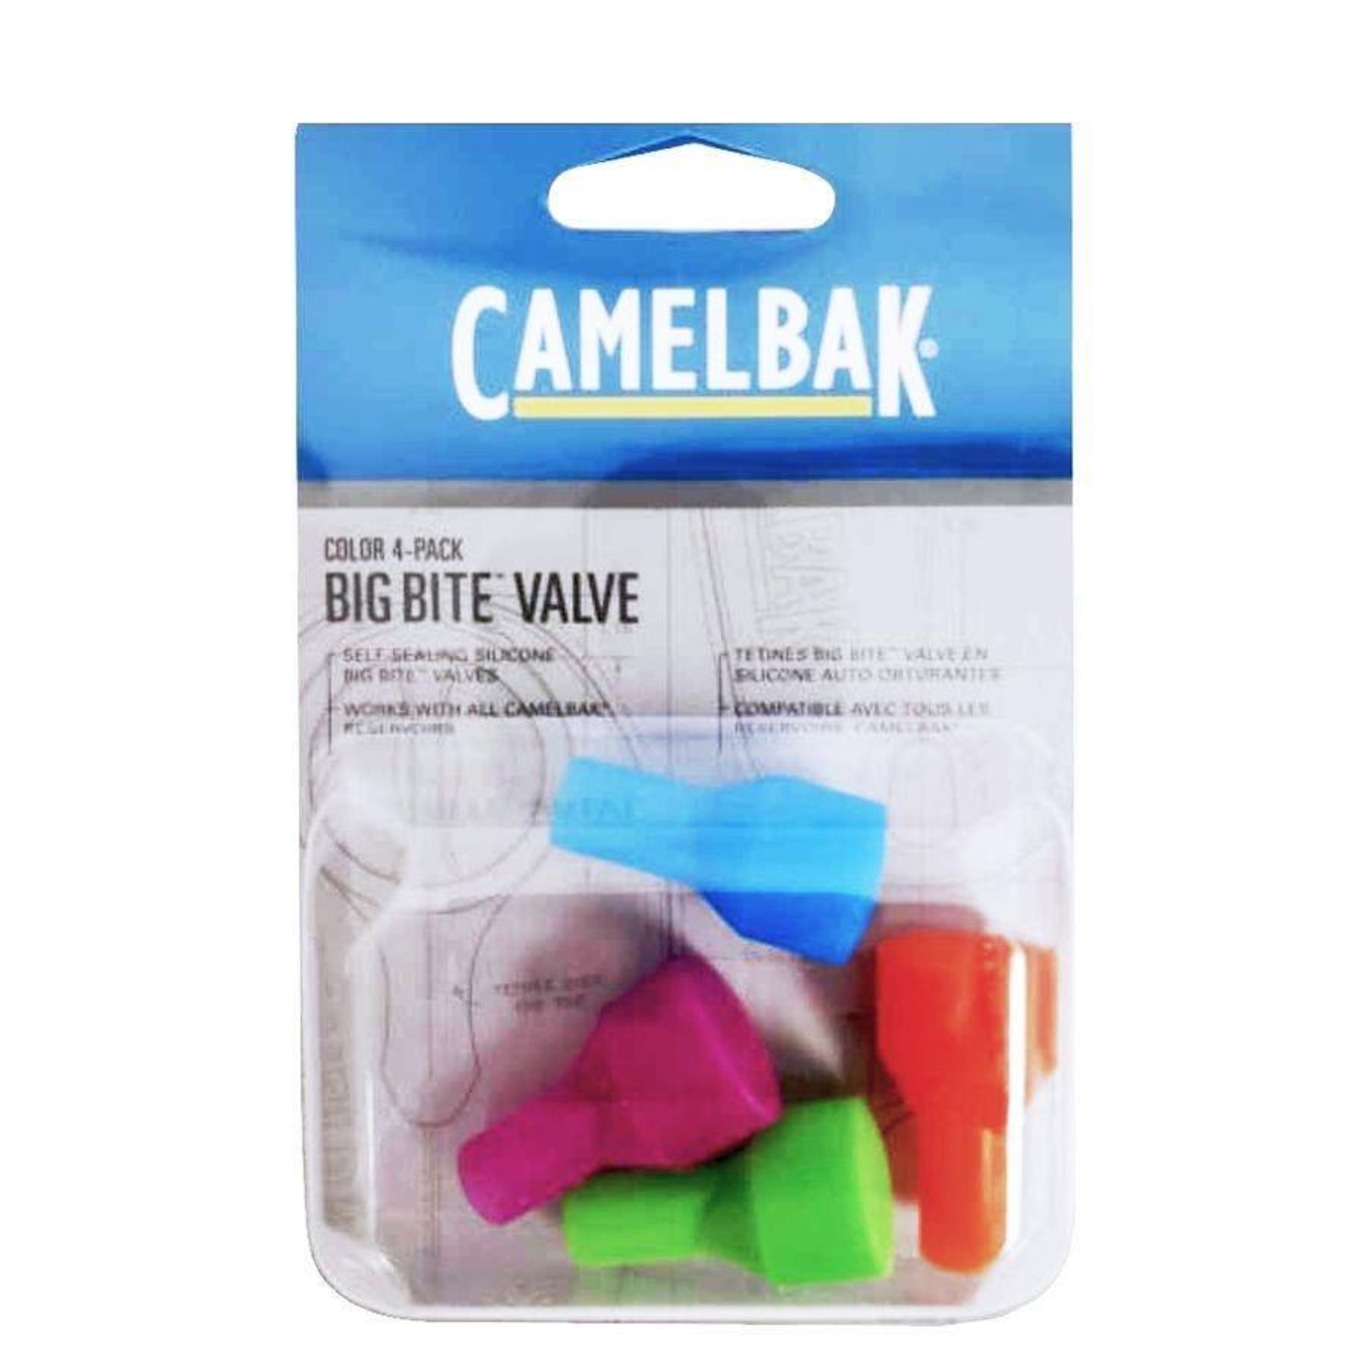 Camelbak Big Bite Valves